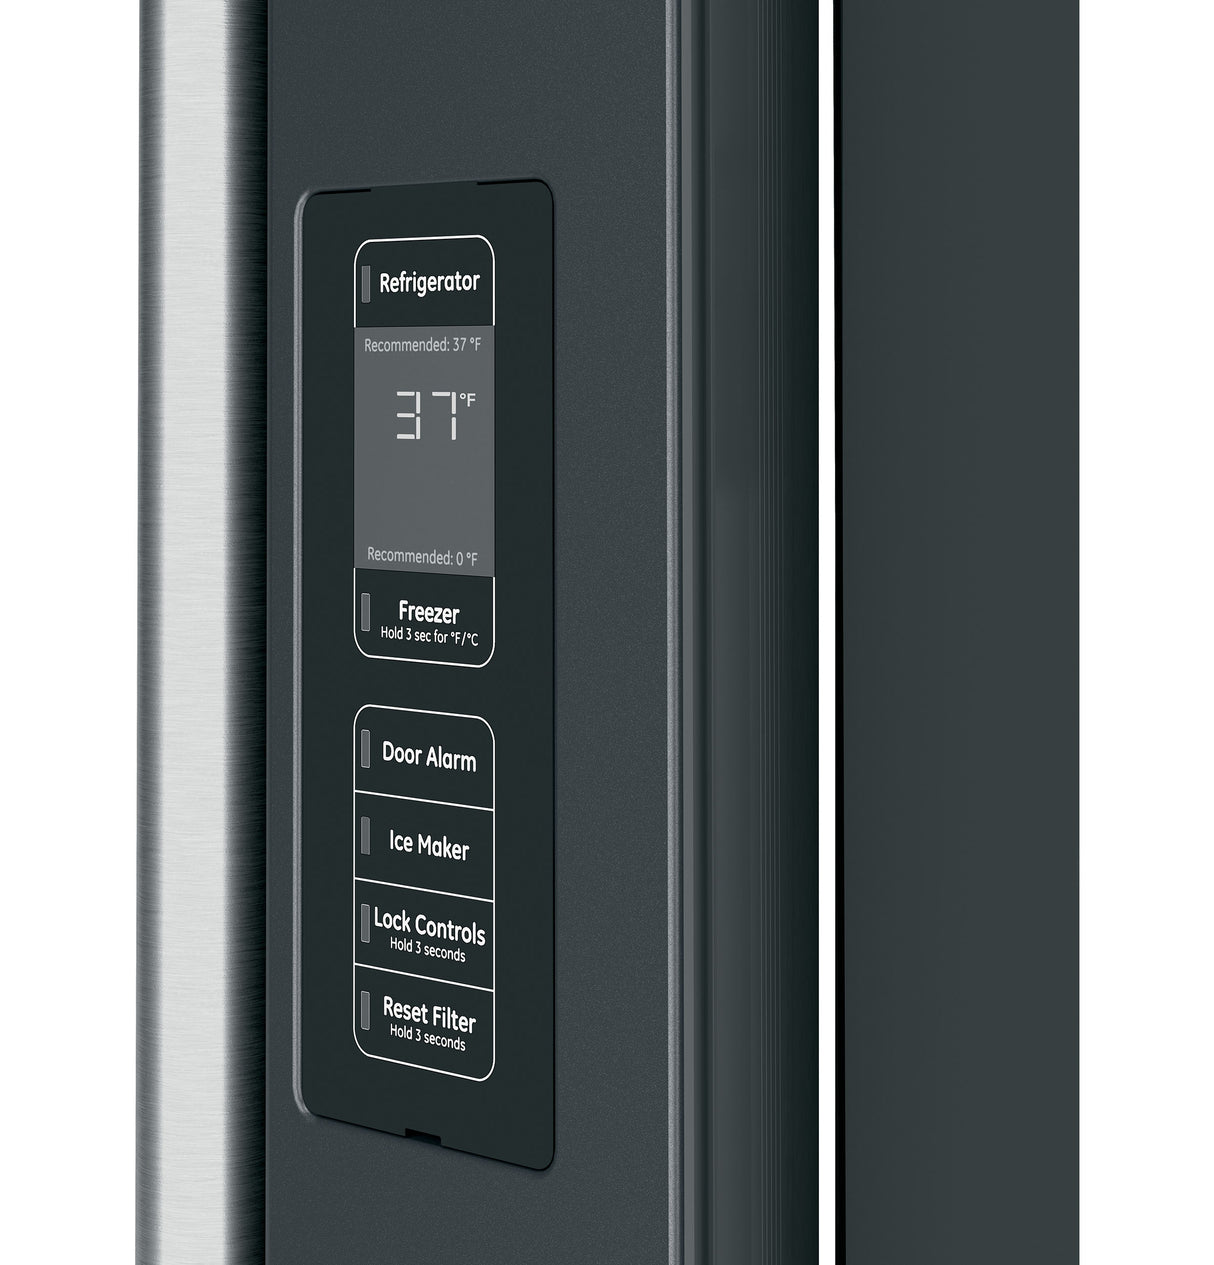 Caf(eback)(TM) ENERGY STAR(R) 23.1 Cu. Ft. Smart Counter-Depth French-Door Refrigerator - (CWE23SP2MS1)